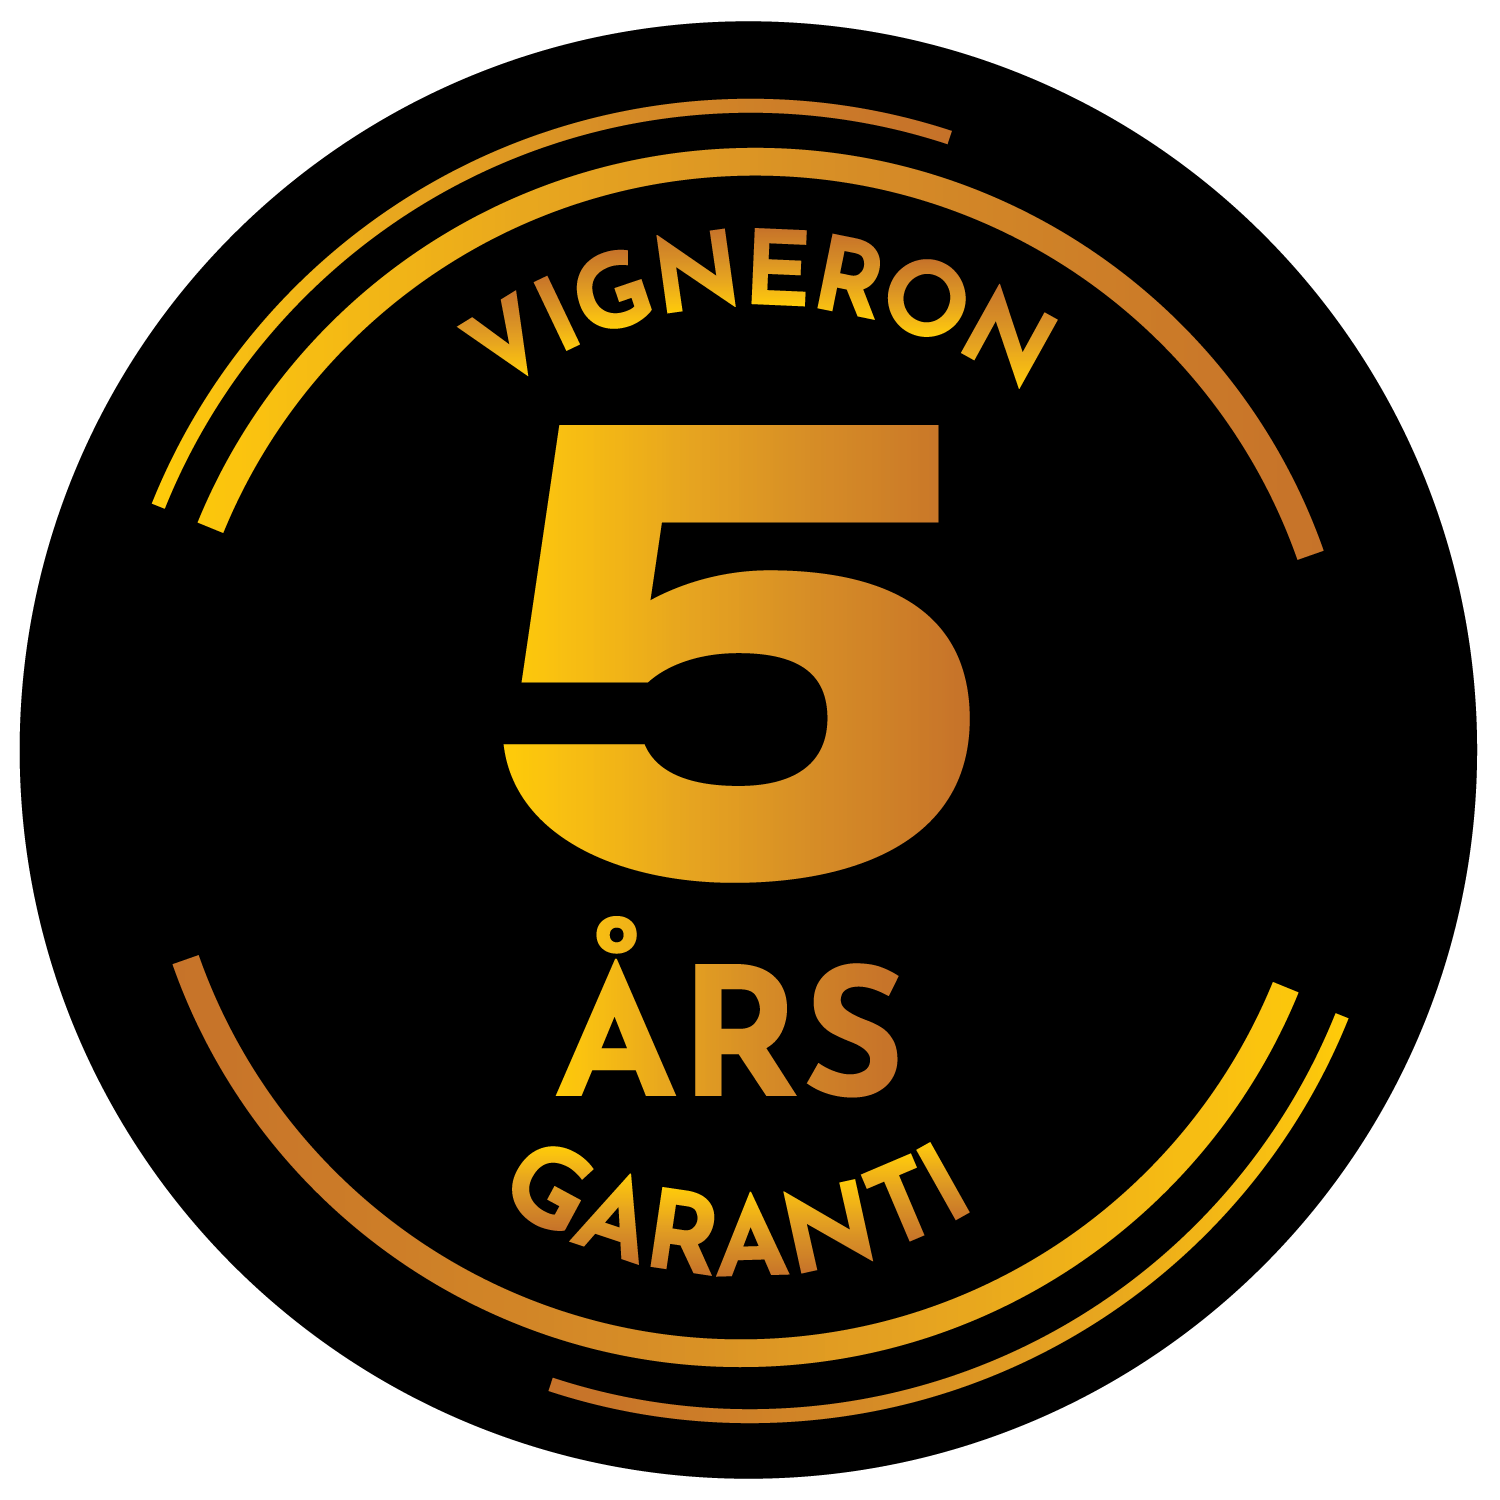 Vigneron Storage 130 SB, Black edition